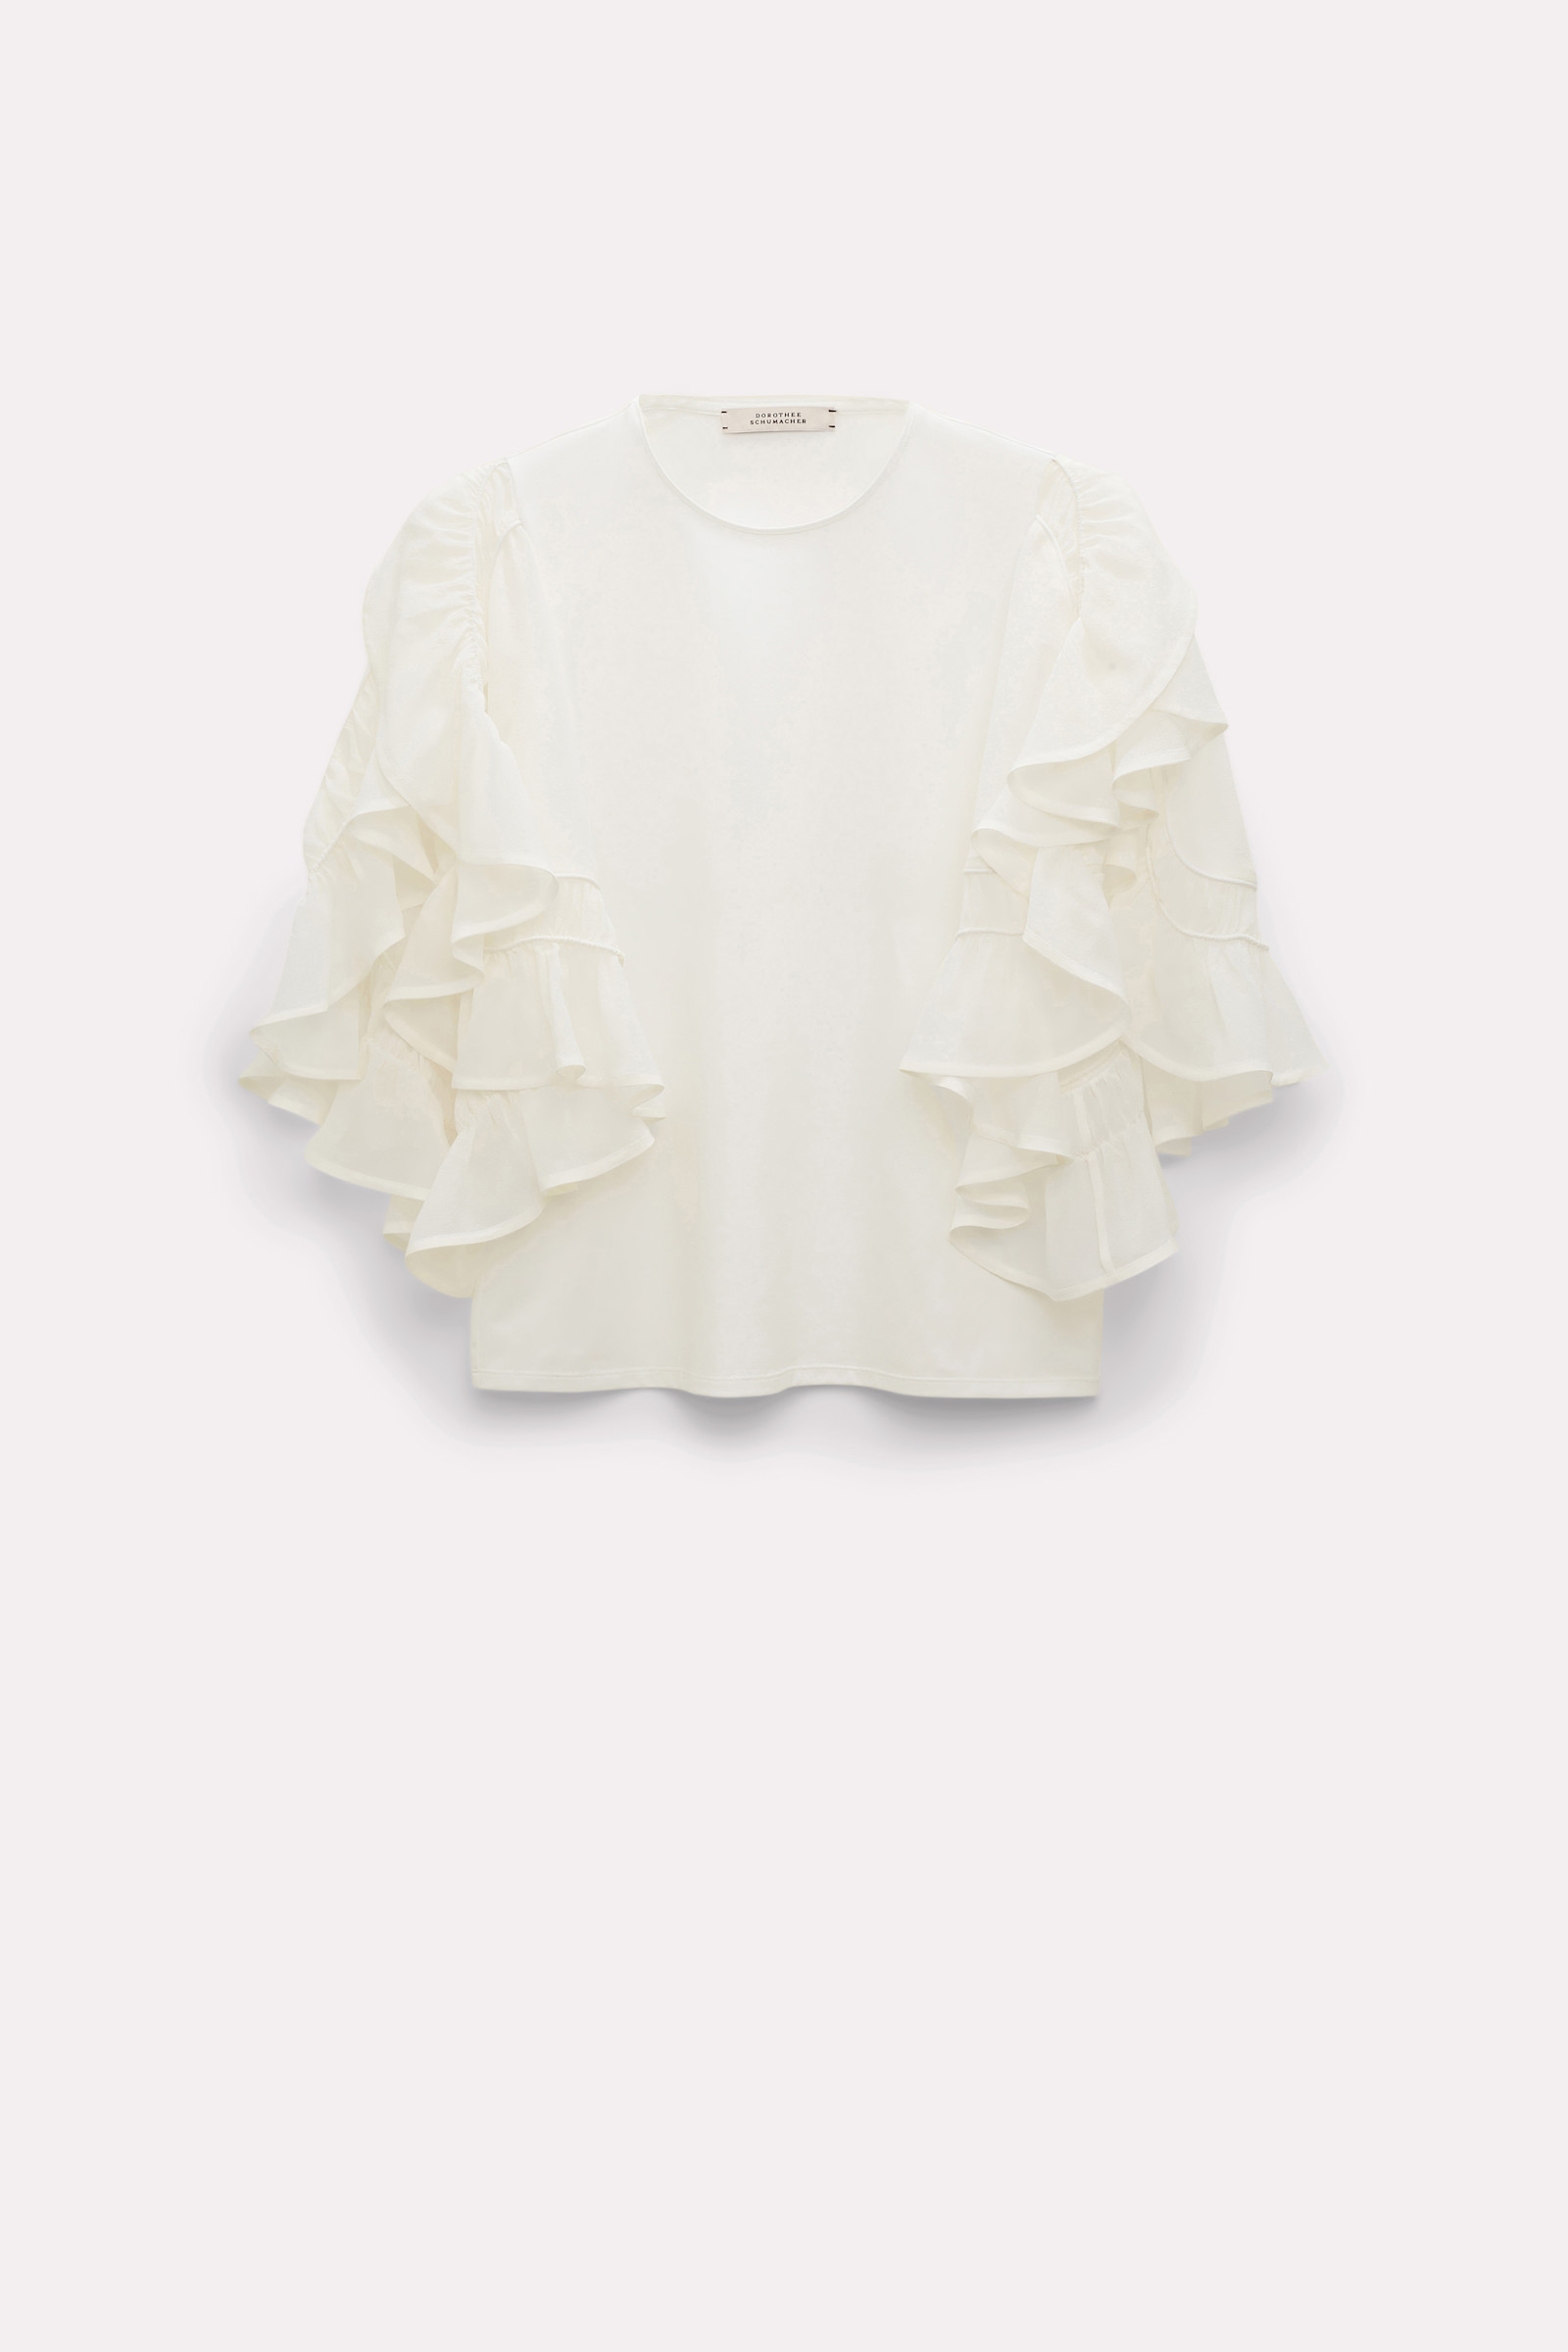 COOL SOFTNESS blouse